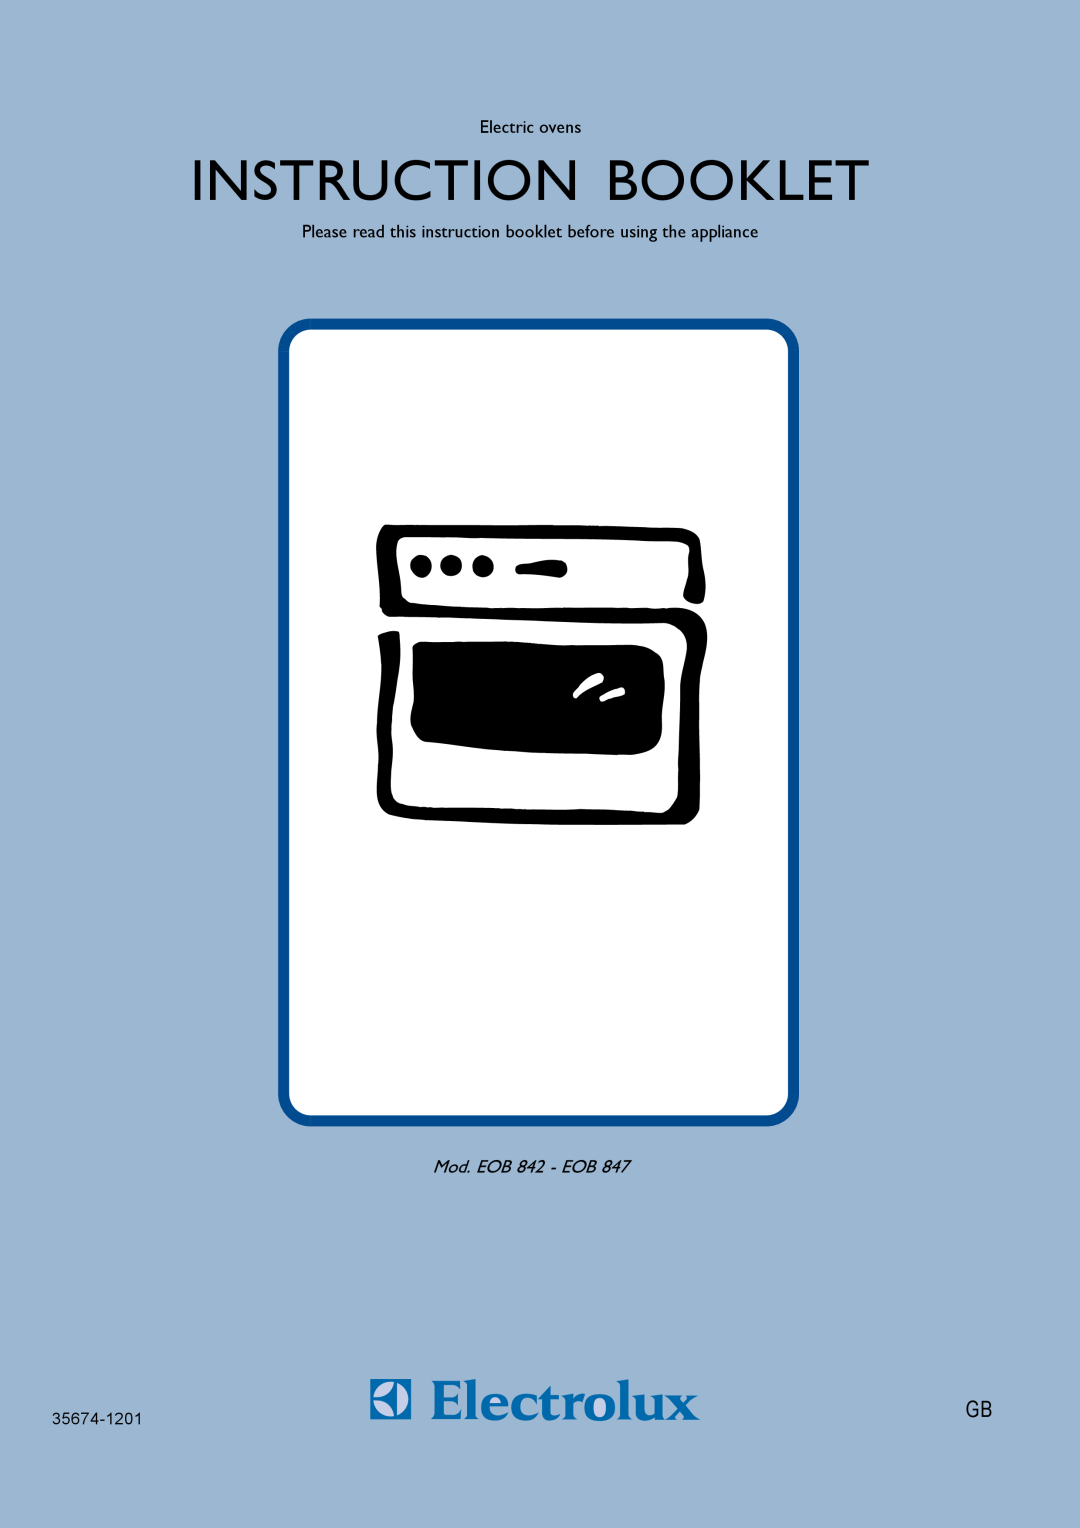 Electrolux EOB 847 manual Instruction Booklet, Electric ovens, Mod. EOB 842 - EOB, 35674-1201 